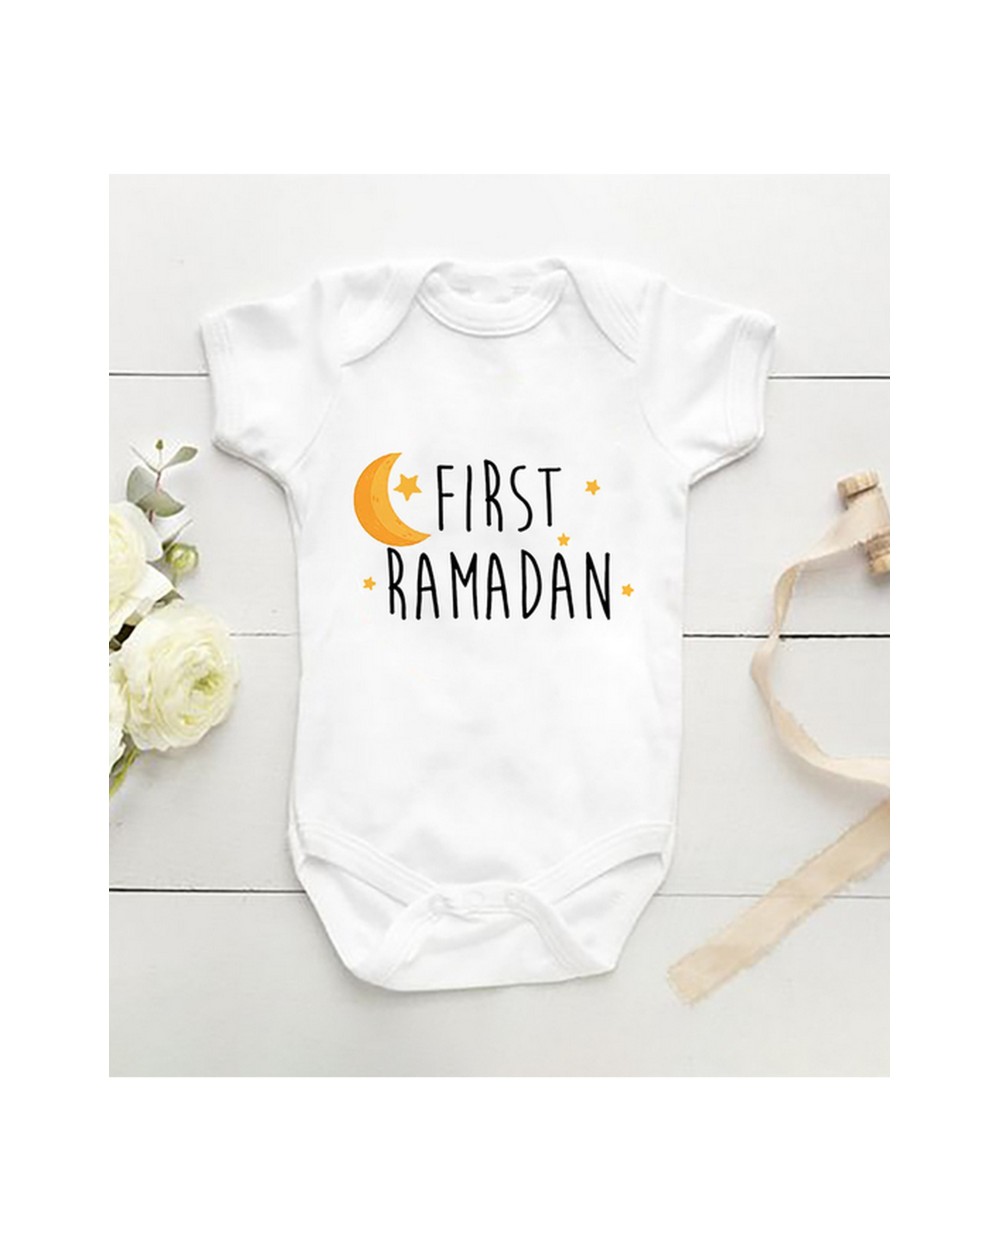 Moon and star "First Ramadan" baby bodysuit